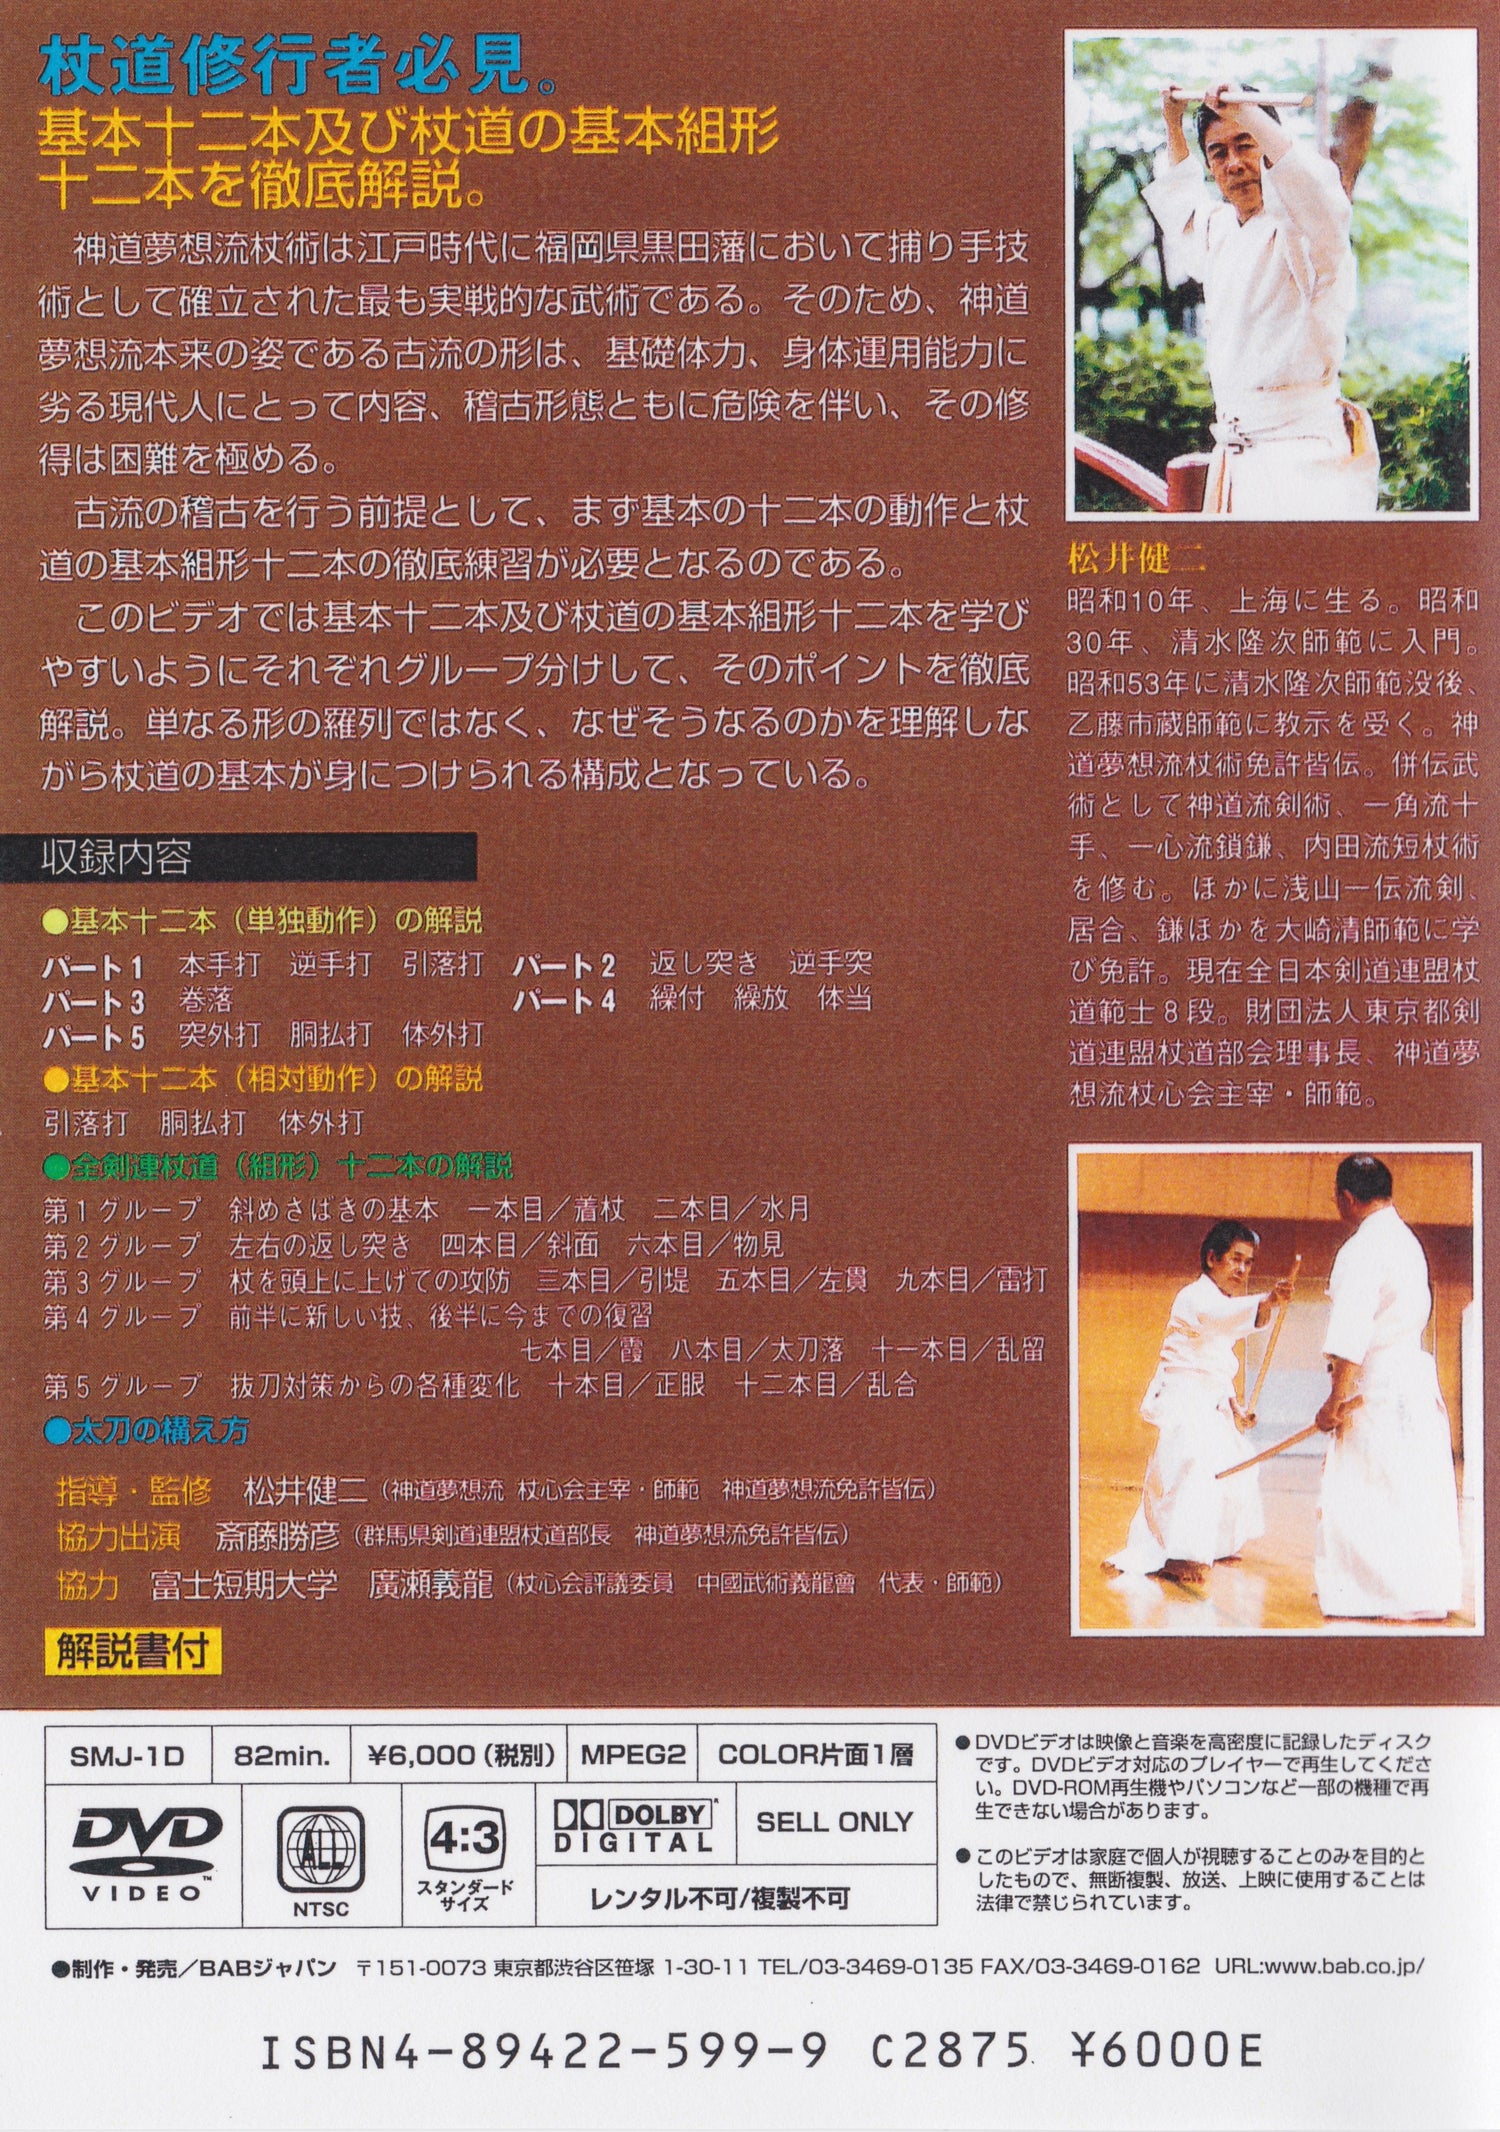 Shinto Muso Ryu: Technical Skills Vol 1 by Kenji Matsui DVD